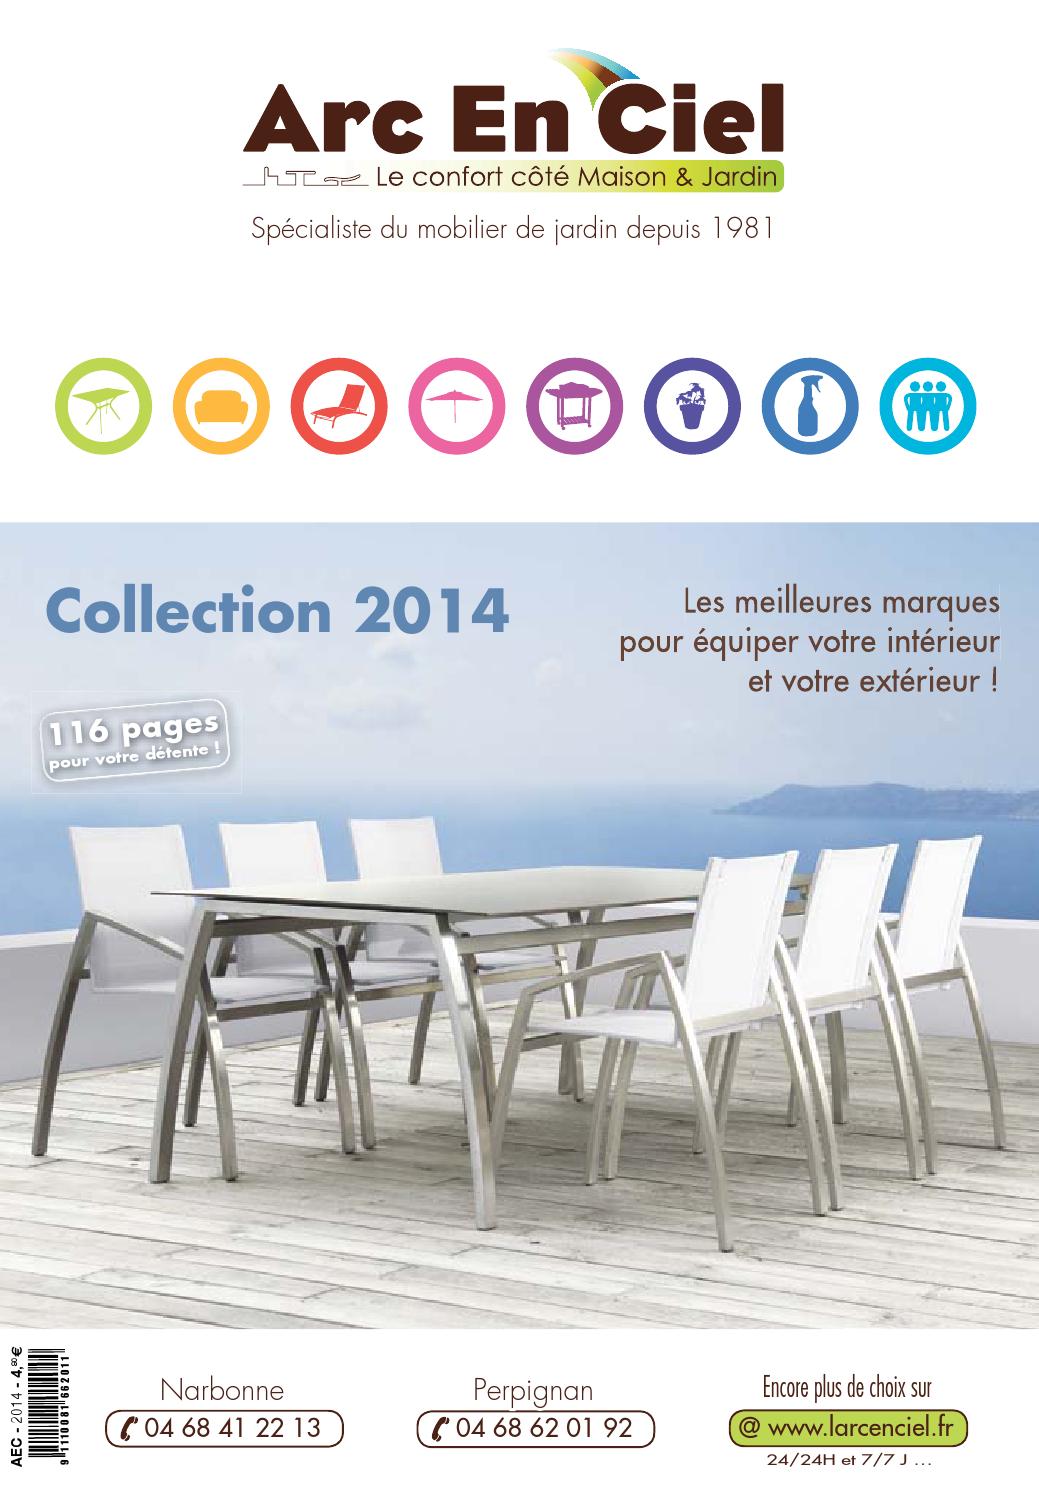 Salon De Jardin Polywood Unique Catalogue Arc En Ciel 2014 by Igloo issuu